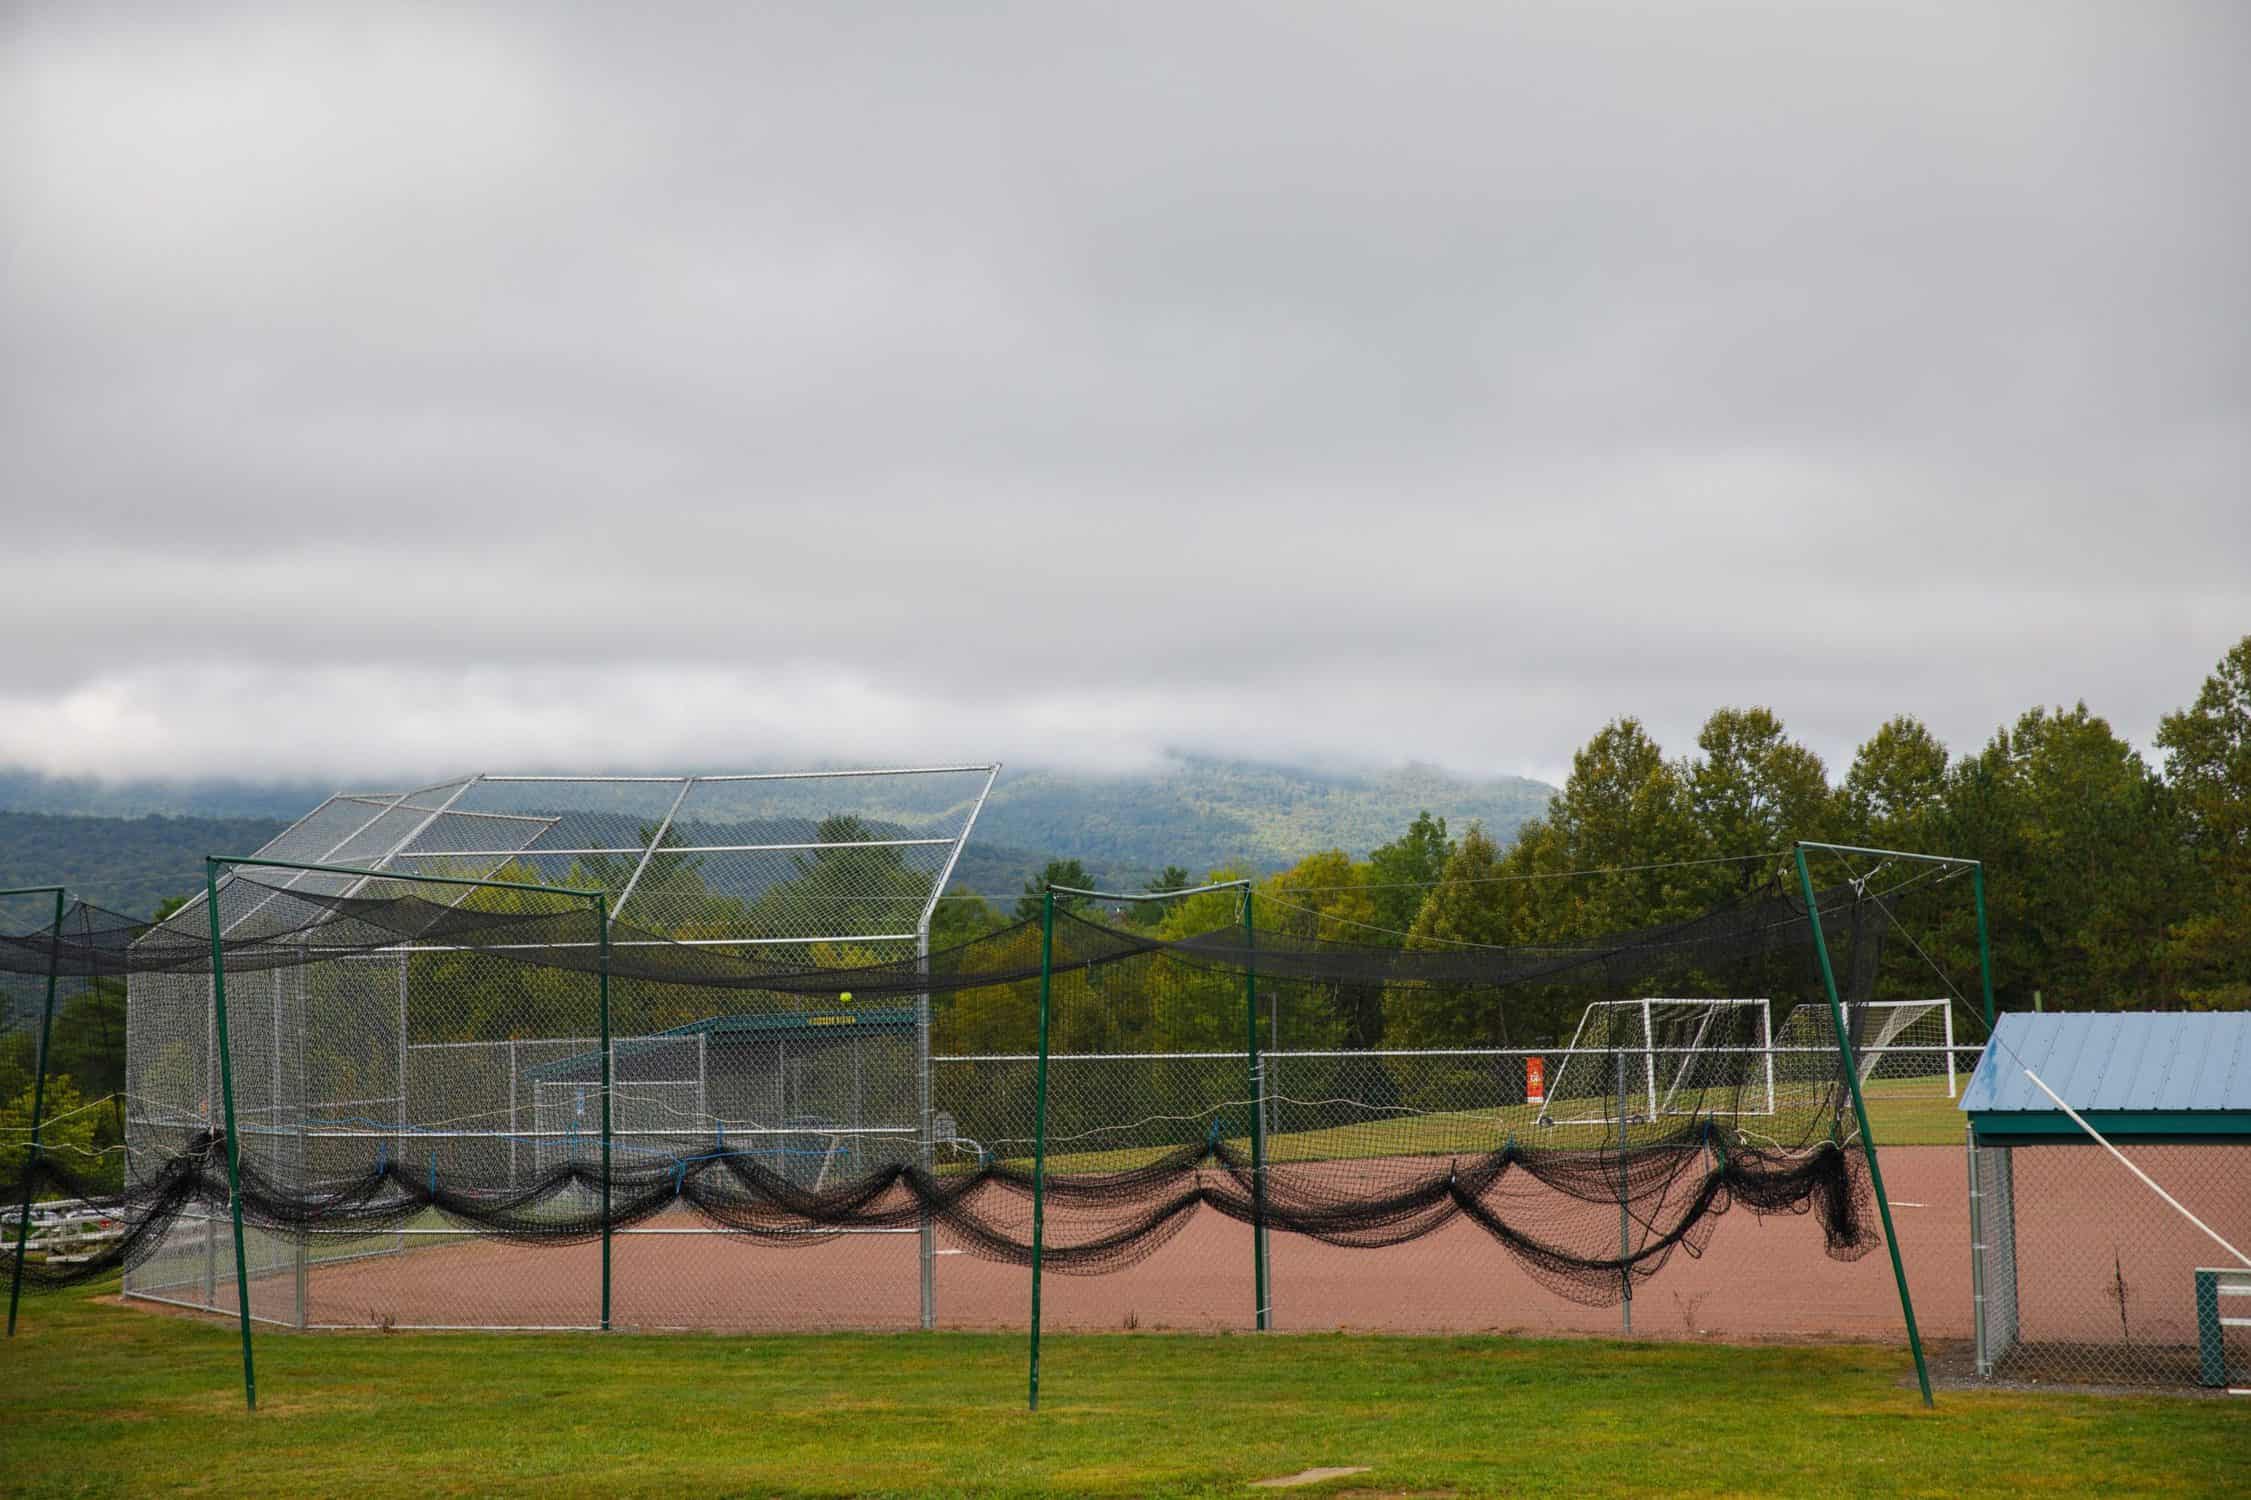 Softball field